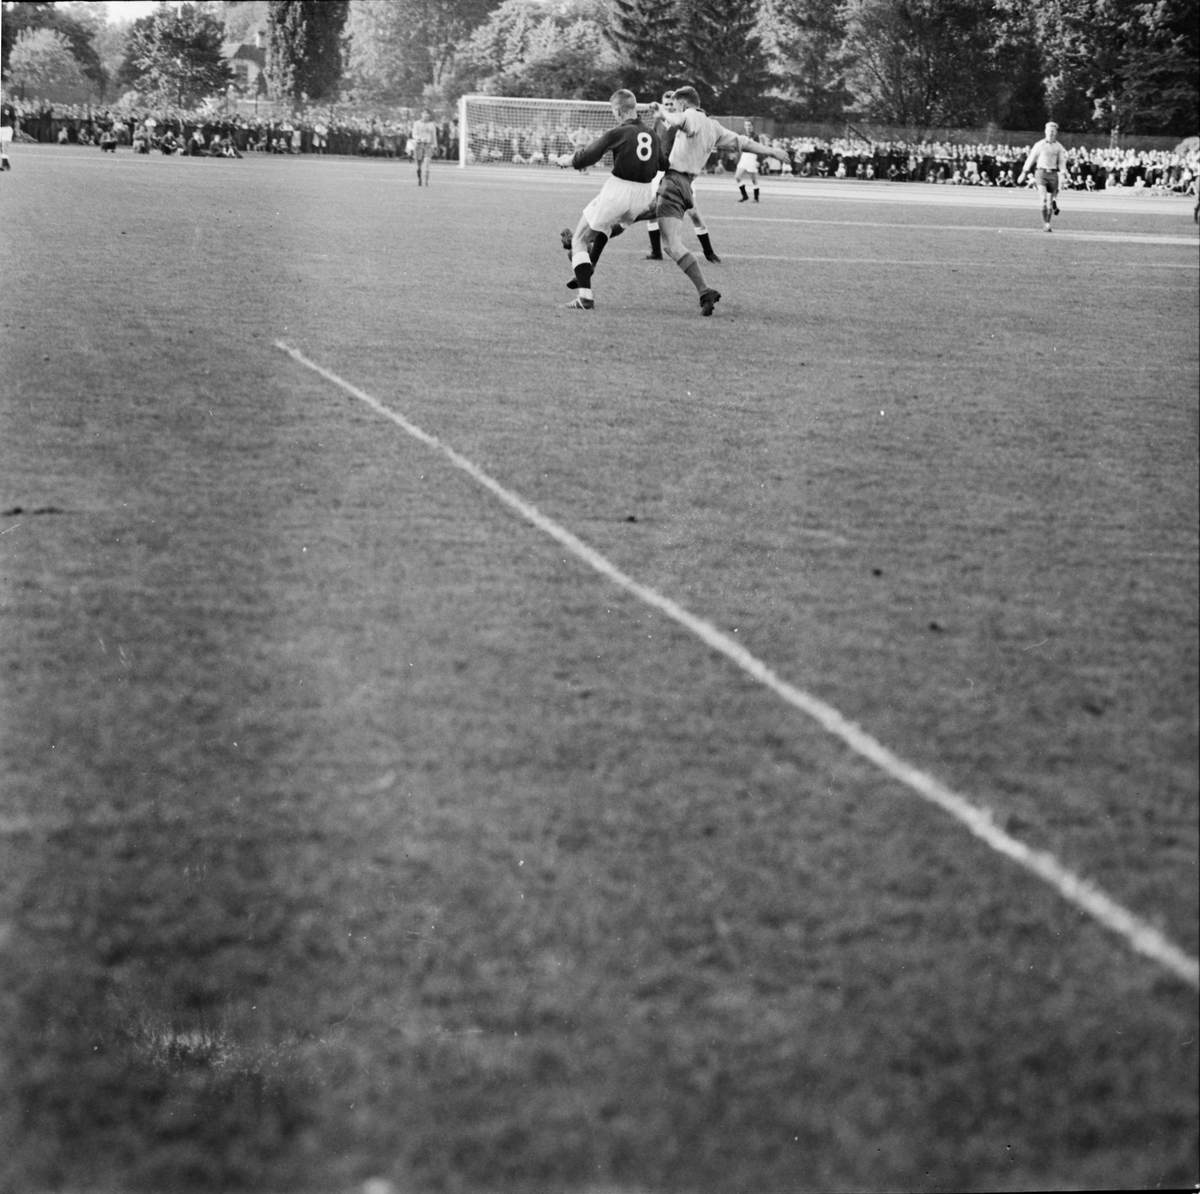 Sverige - Norge i B-landskamp i fotboll, Uppsala 1958